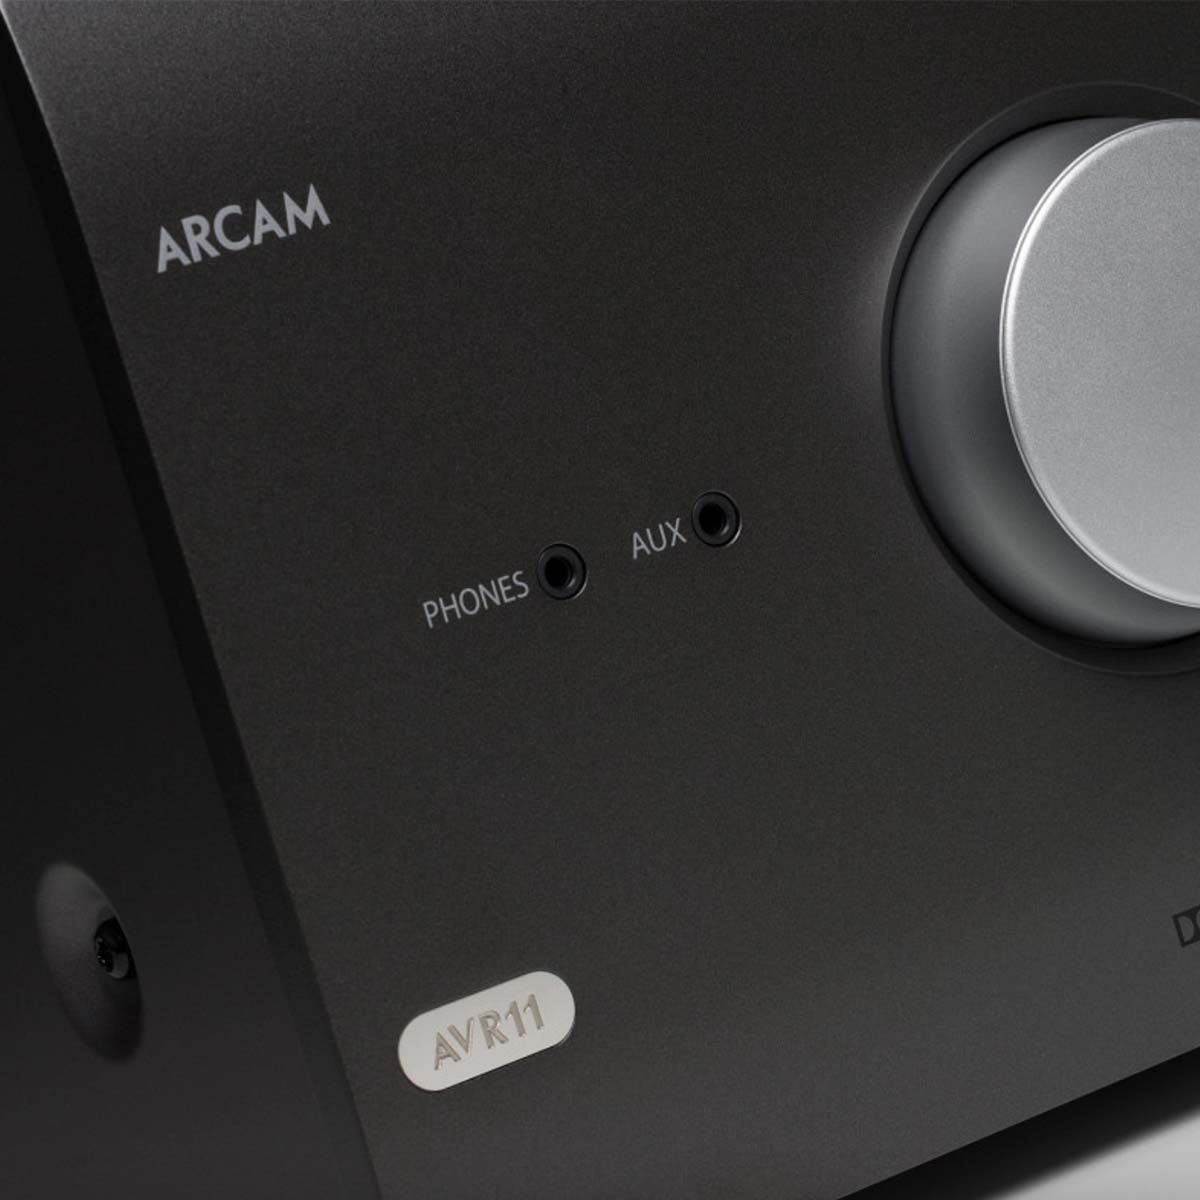 Arcam AVR11 Receiver, front panel knob detail